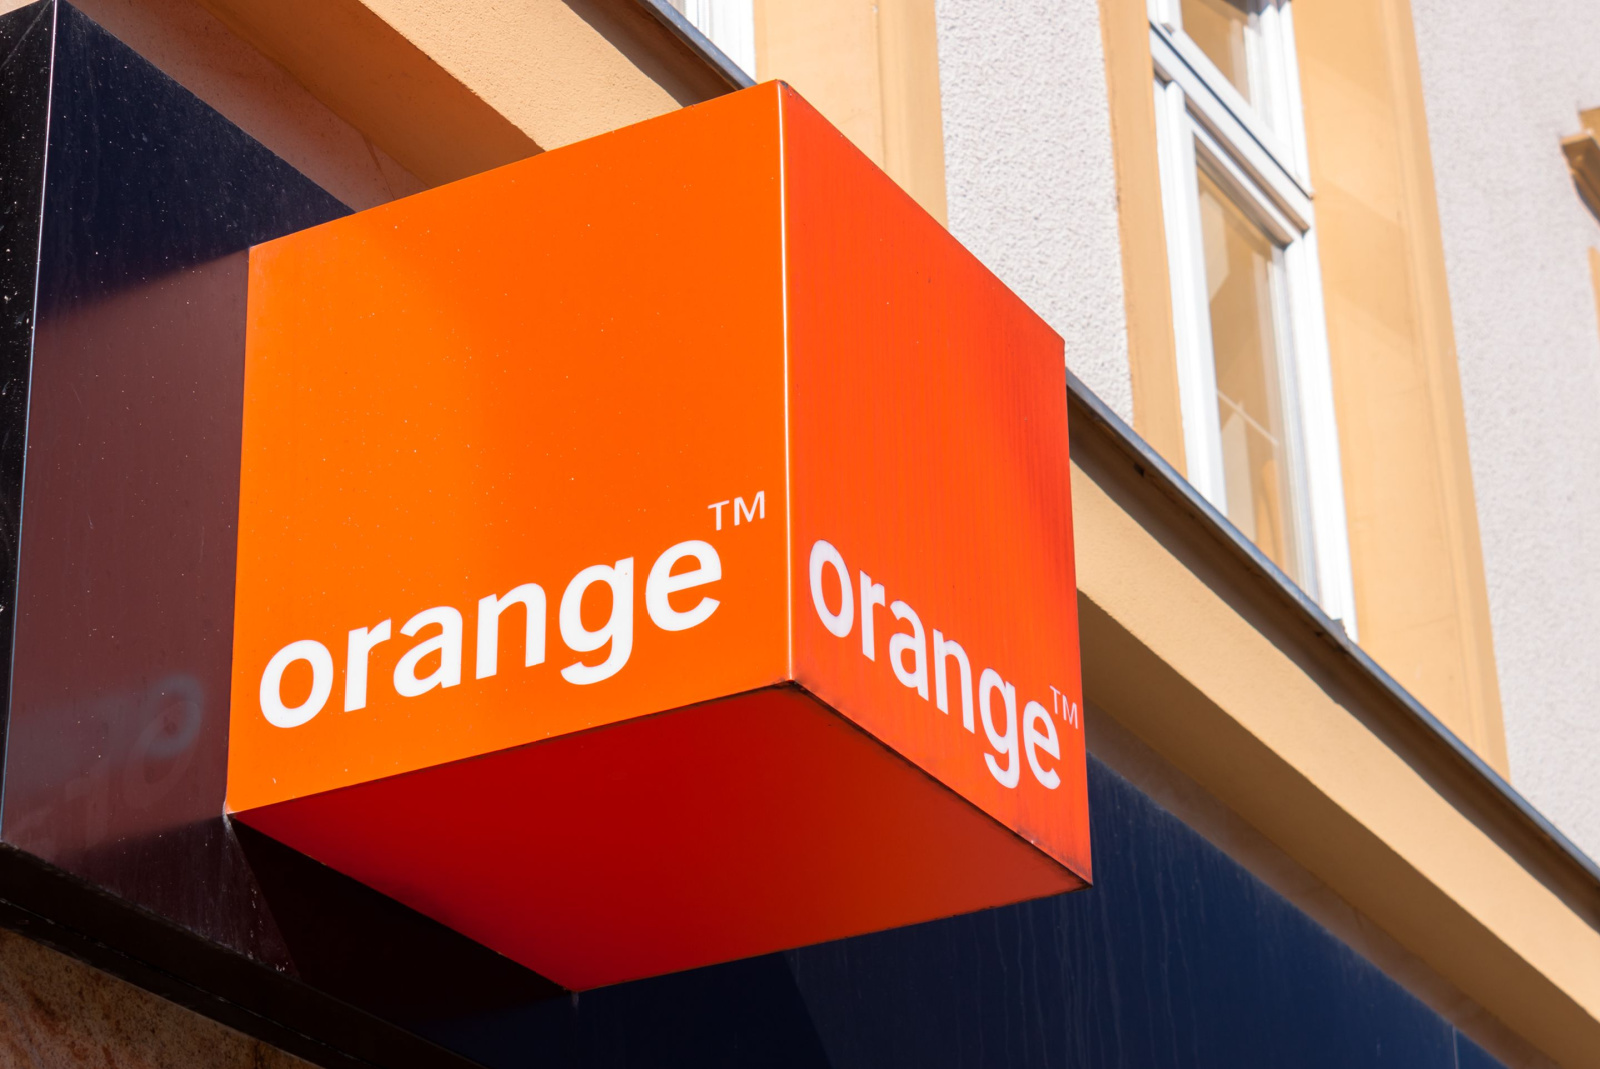 Mobiles Doro - Choisissez un forfait - Orange